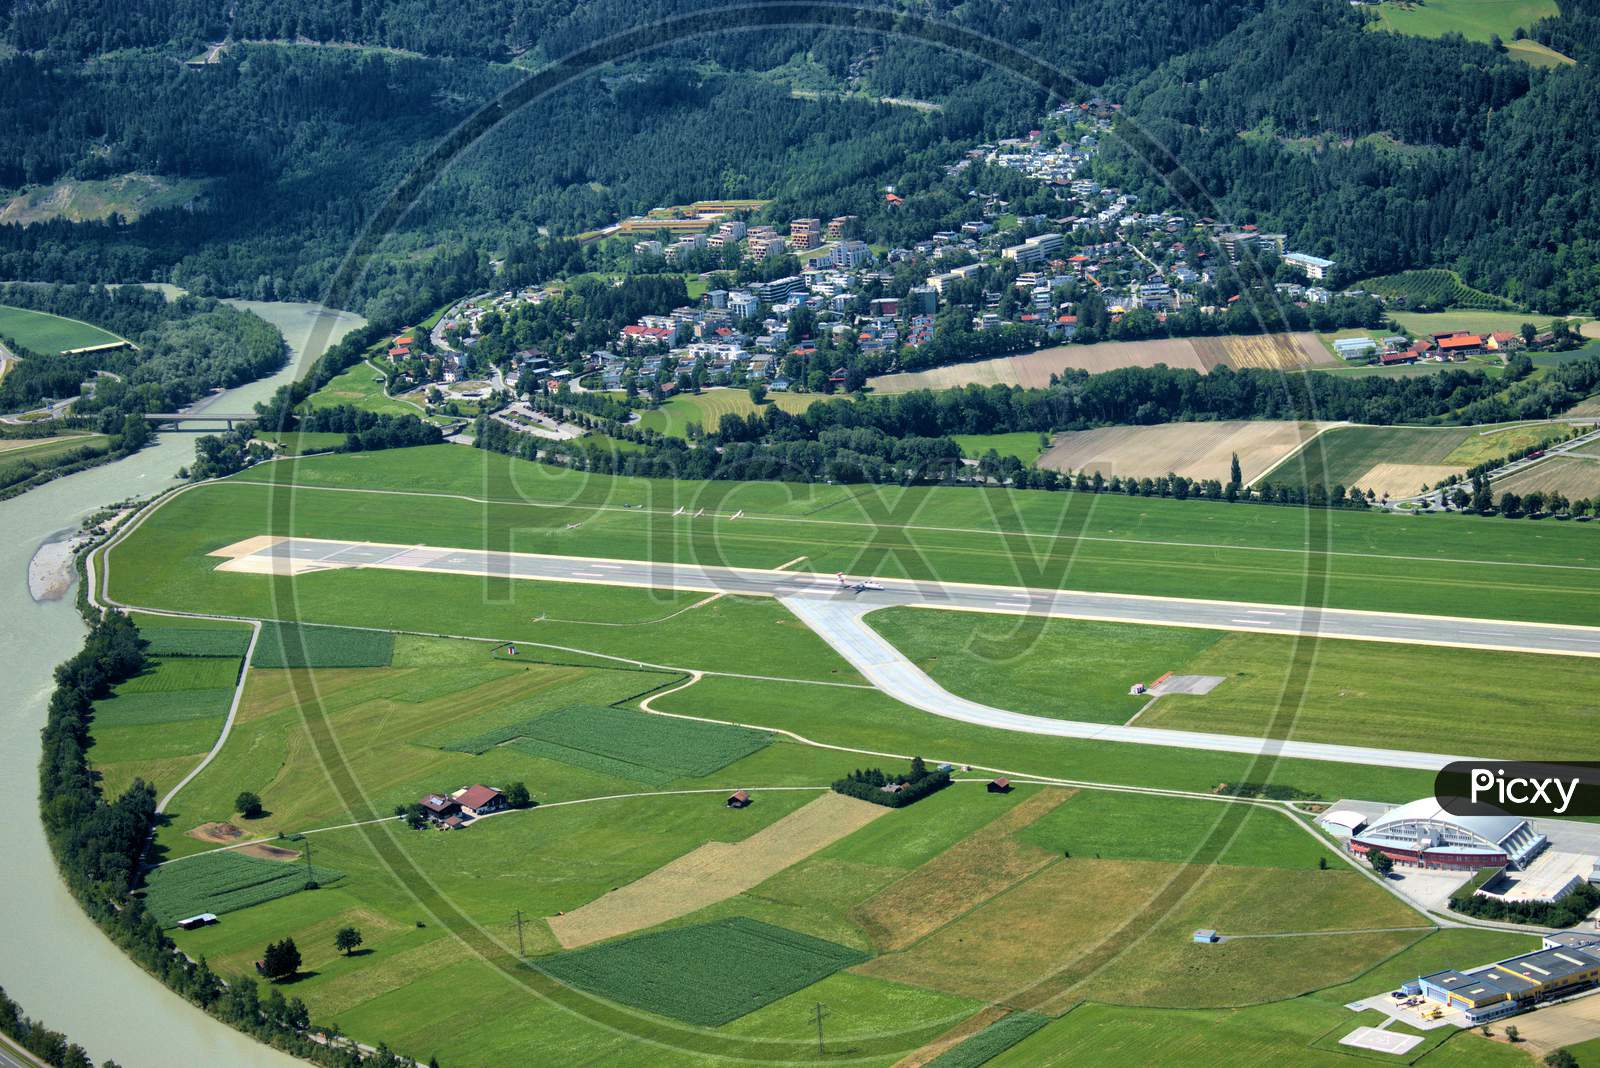 Runway strip of the Innsbruck international airport in Austria 5.7.2020